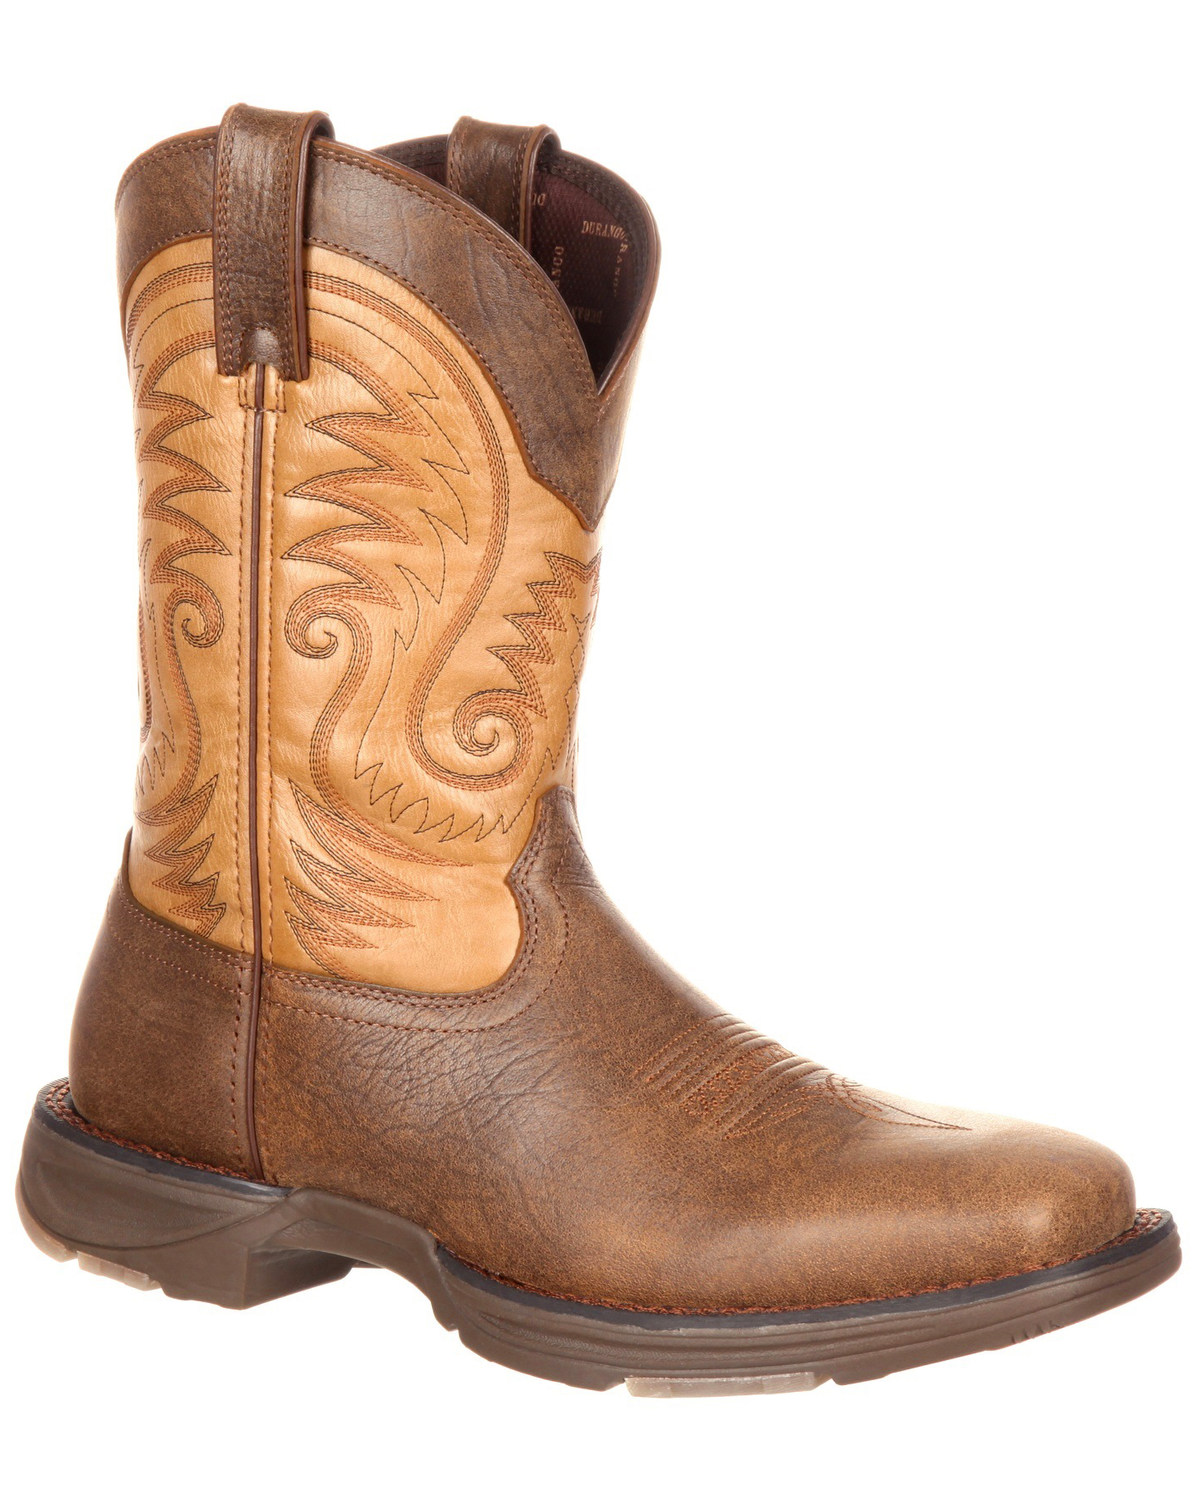 Durango Men's Ultralite Western Boots - Broad Square Toe